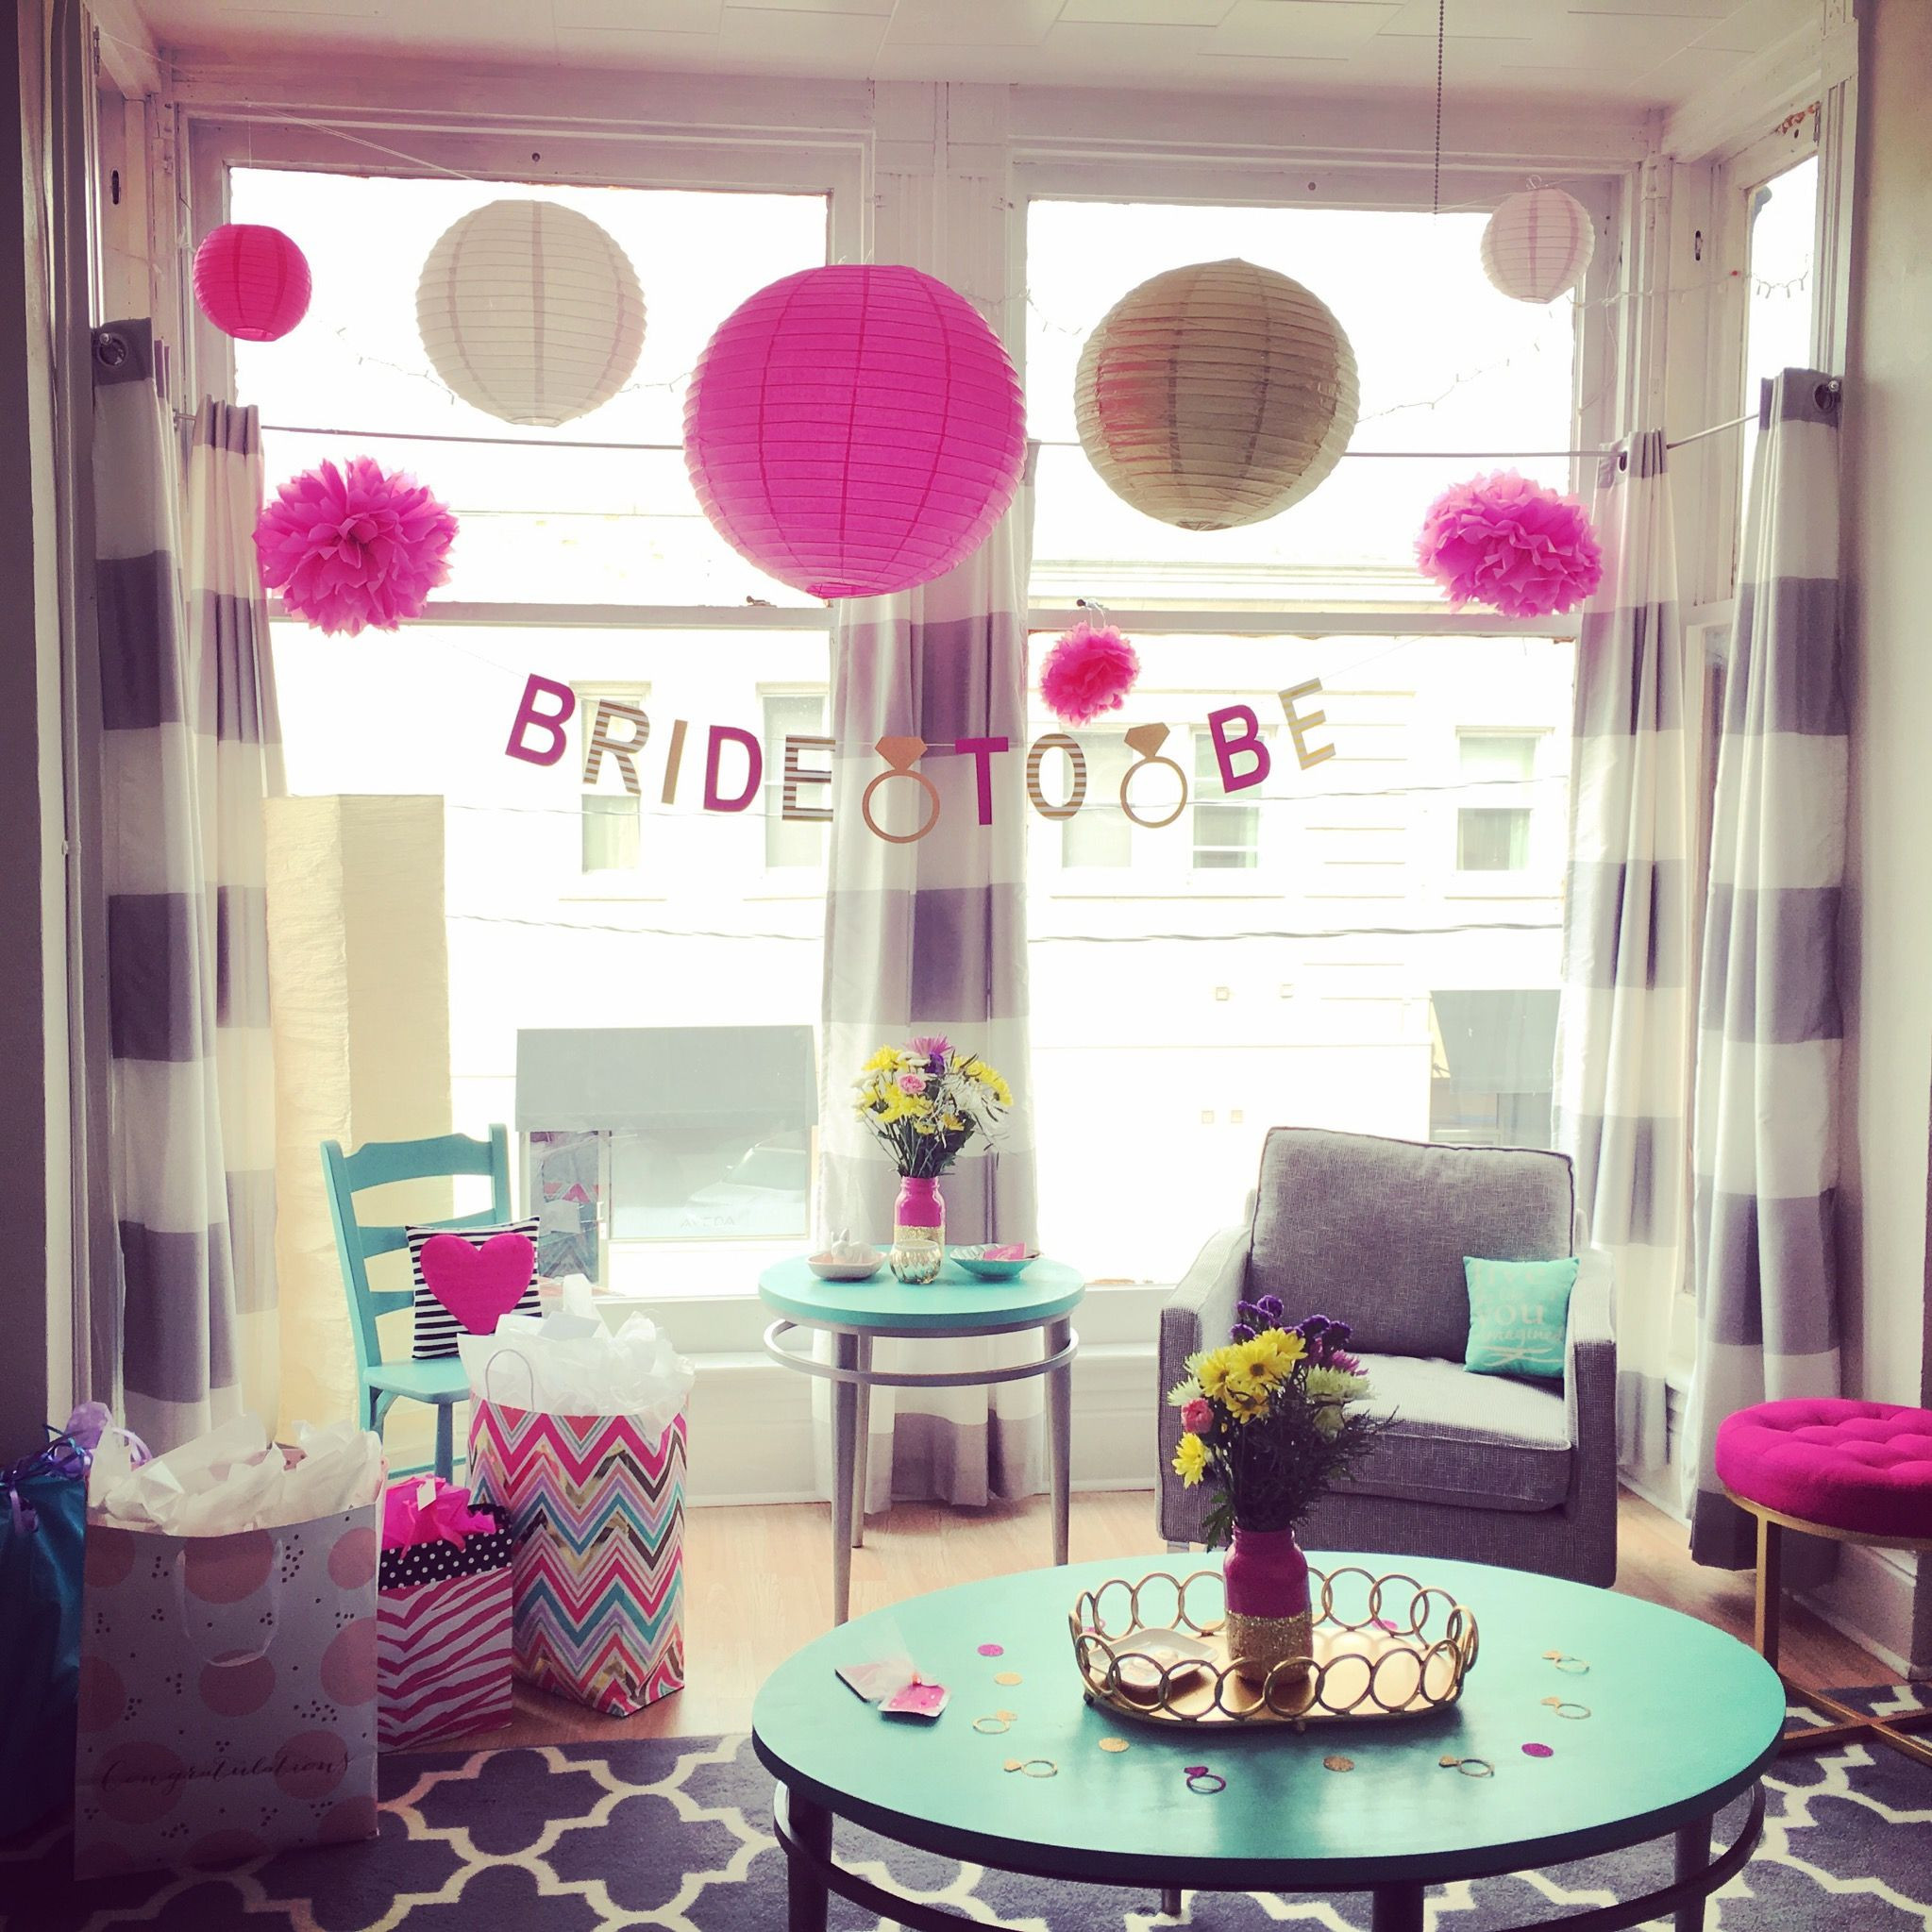 Wedding Bachelorette Party Ideas
 Bridal Shower Bachelorette Party Decorations at home